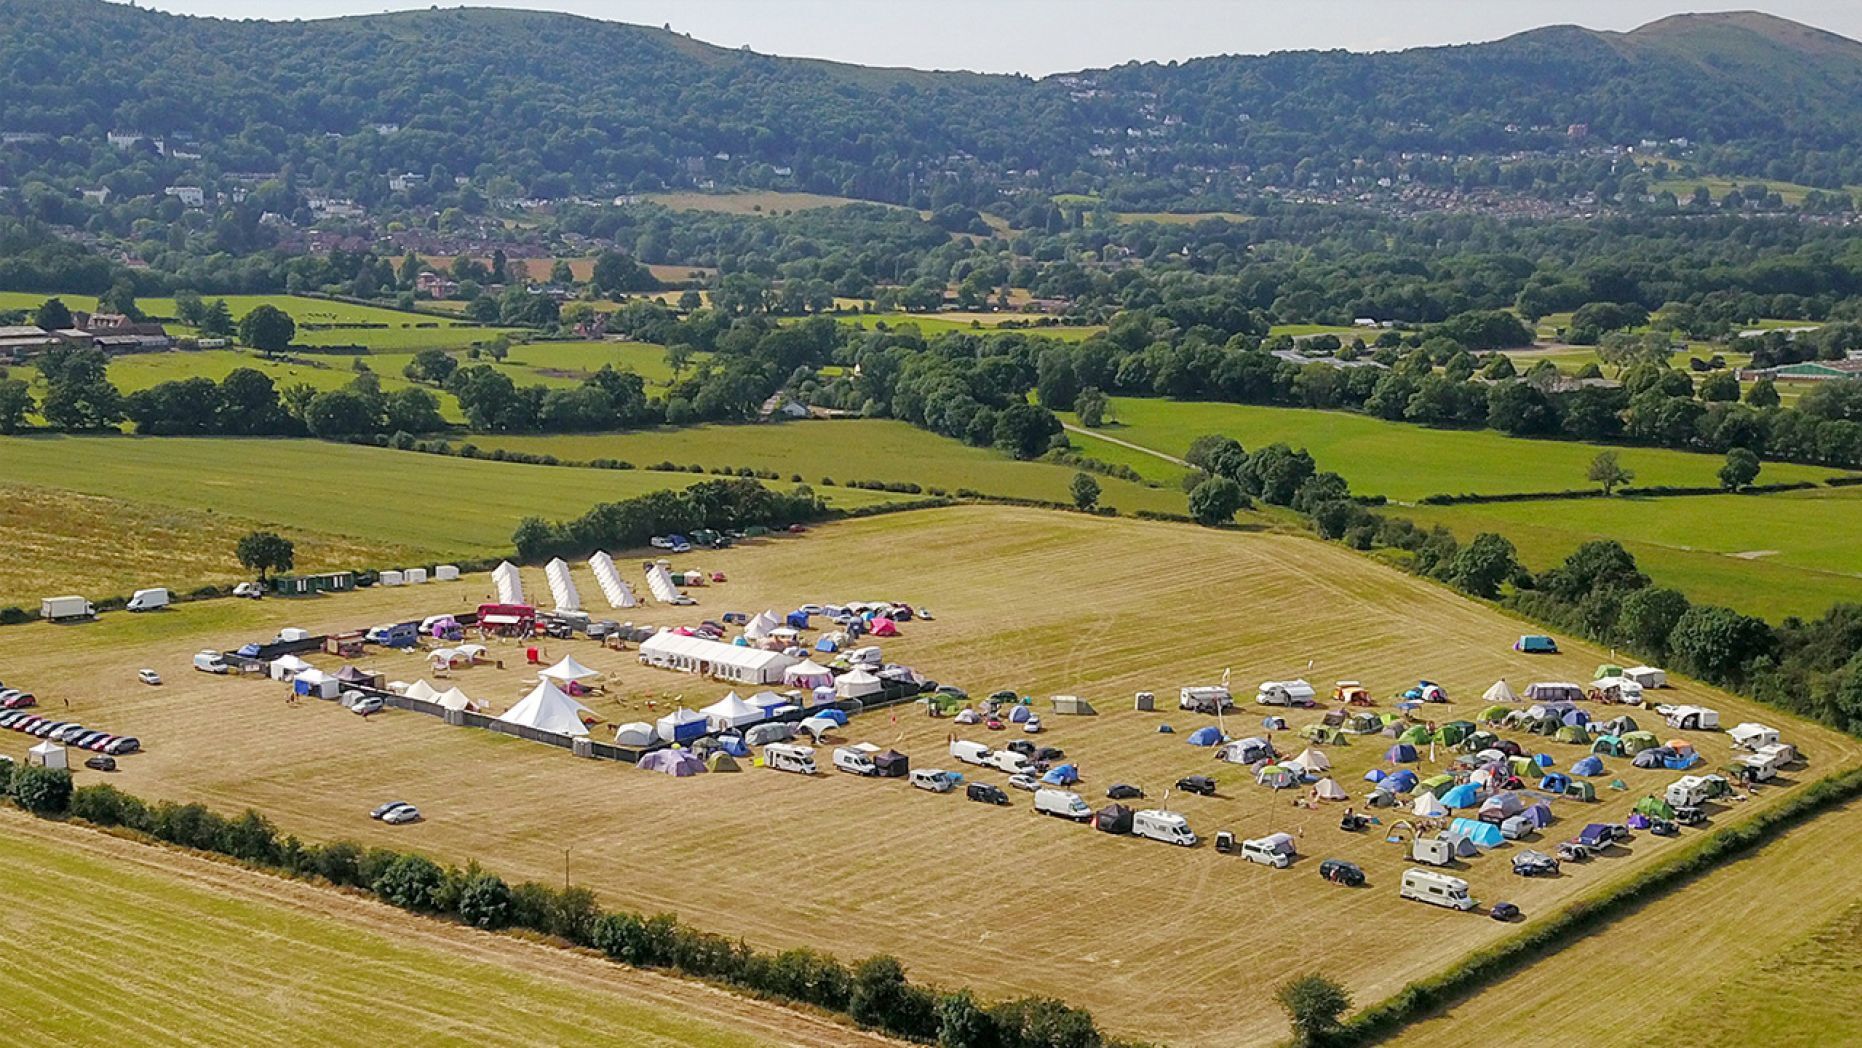 Europes biggest sex festival hits England, aerial photos show National wdrb photo